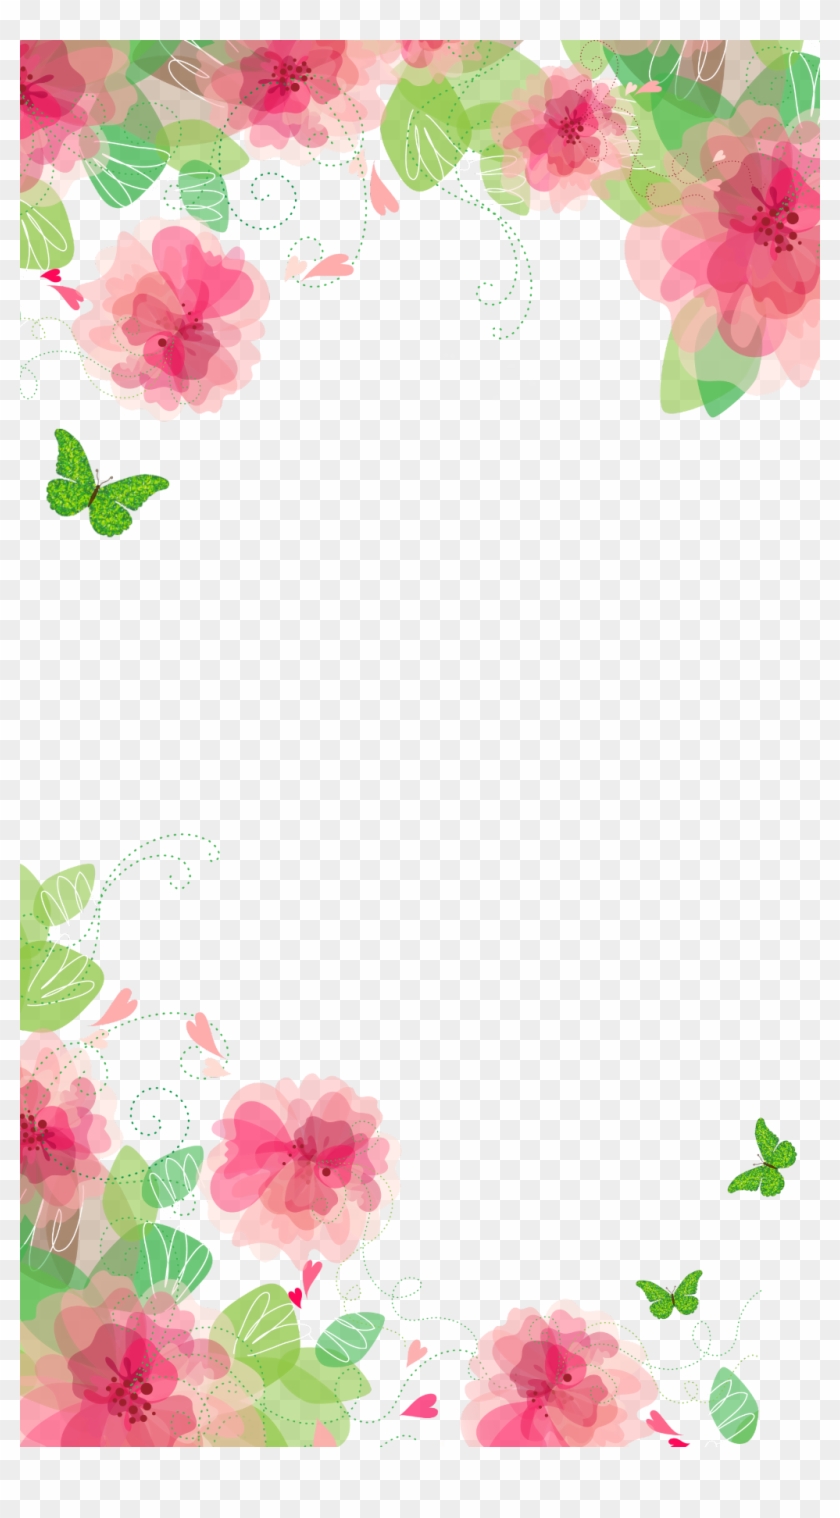 #spring #flowers #butterflies #frame #border #ftestickers - Flower Background Clipart